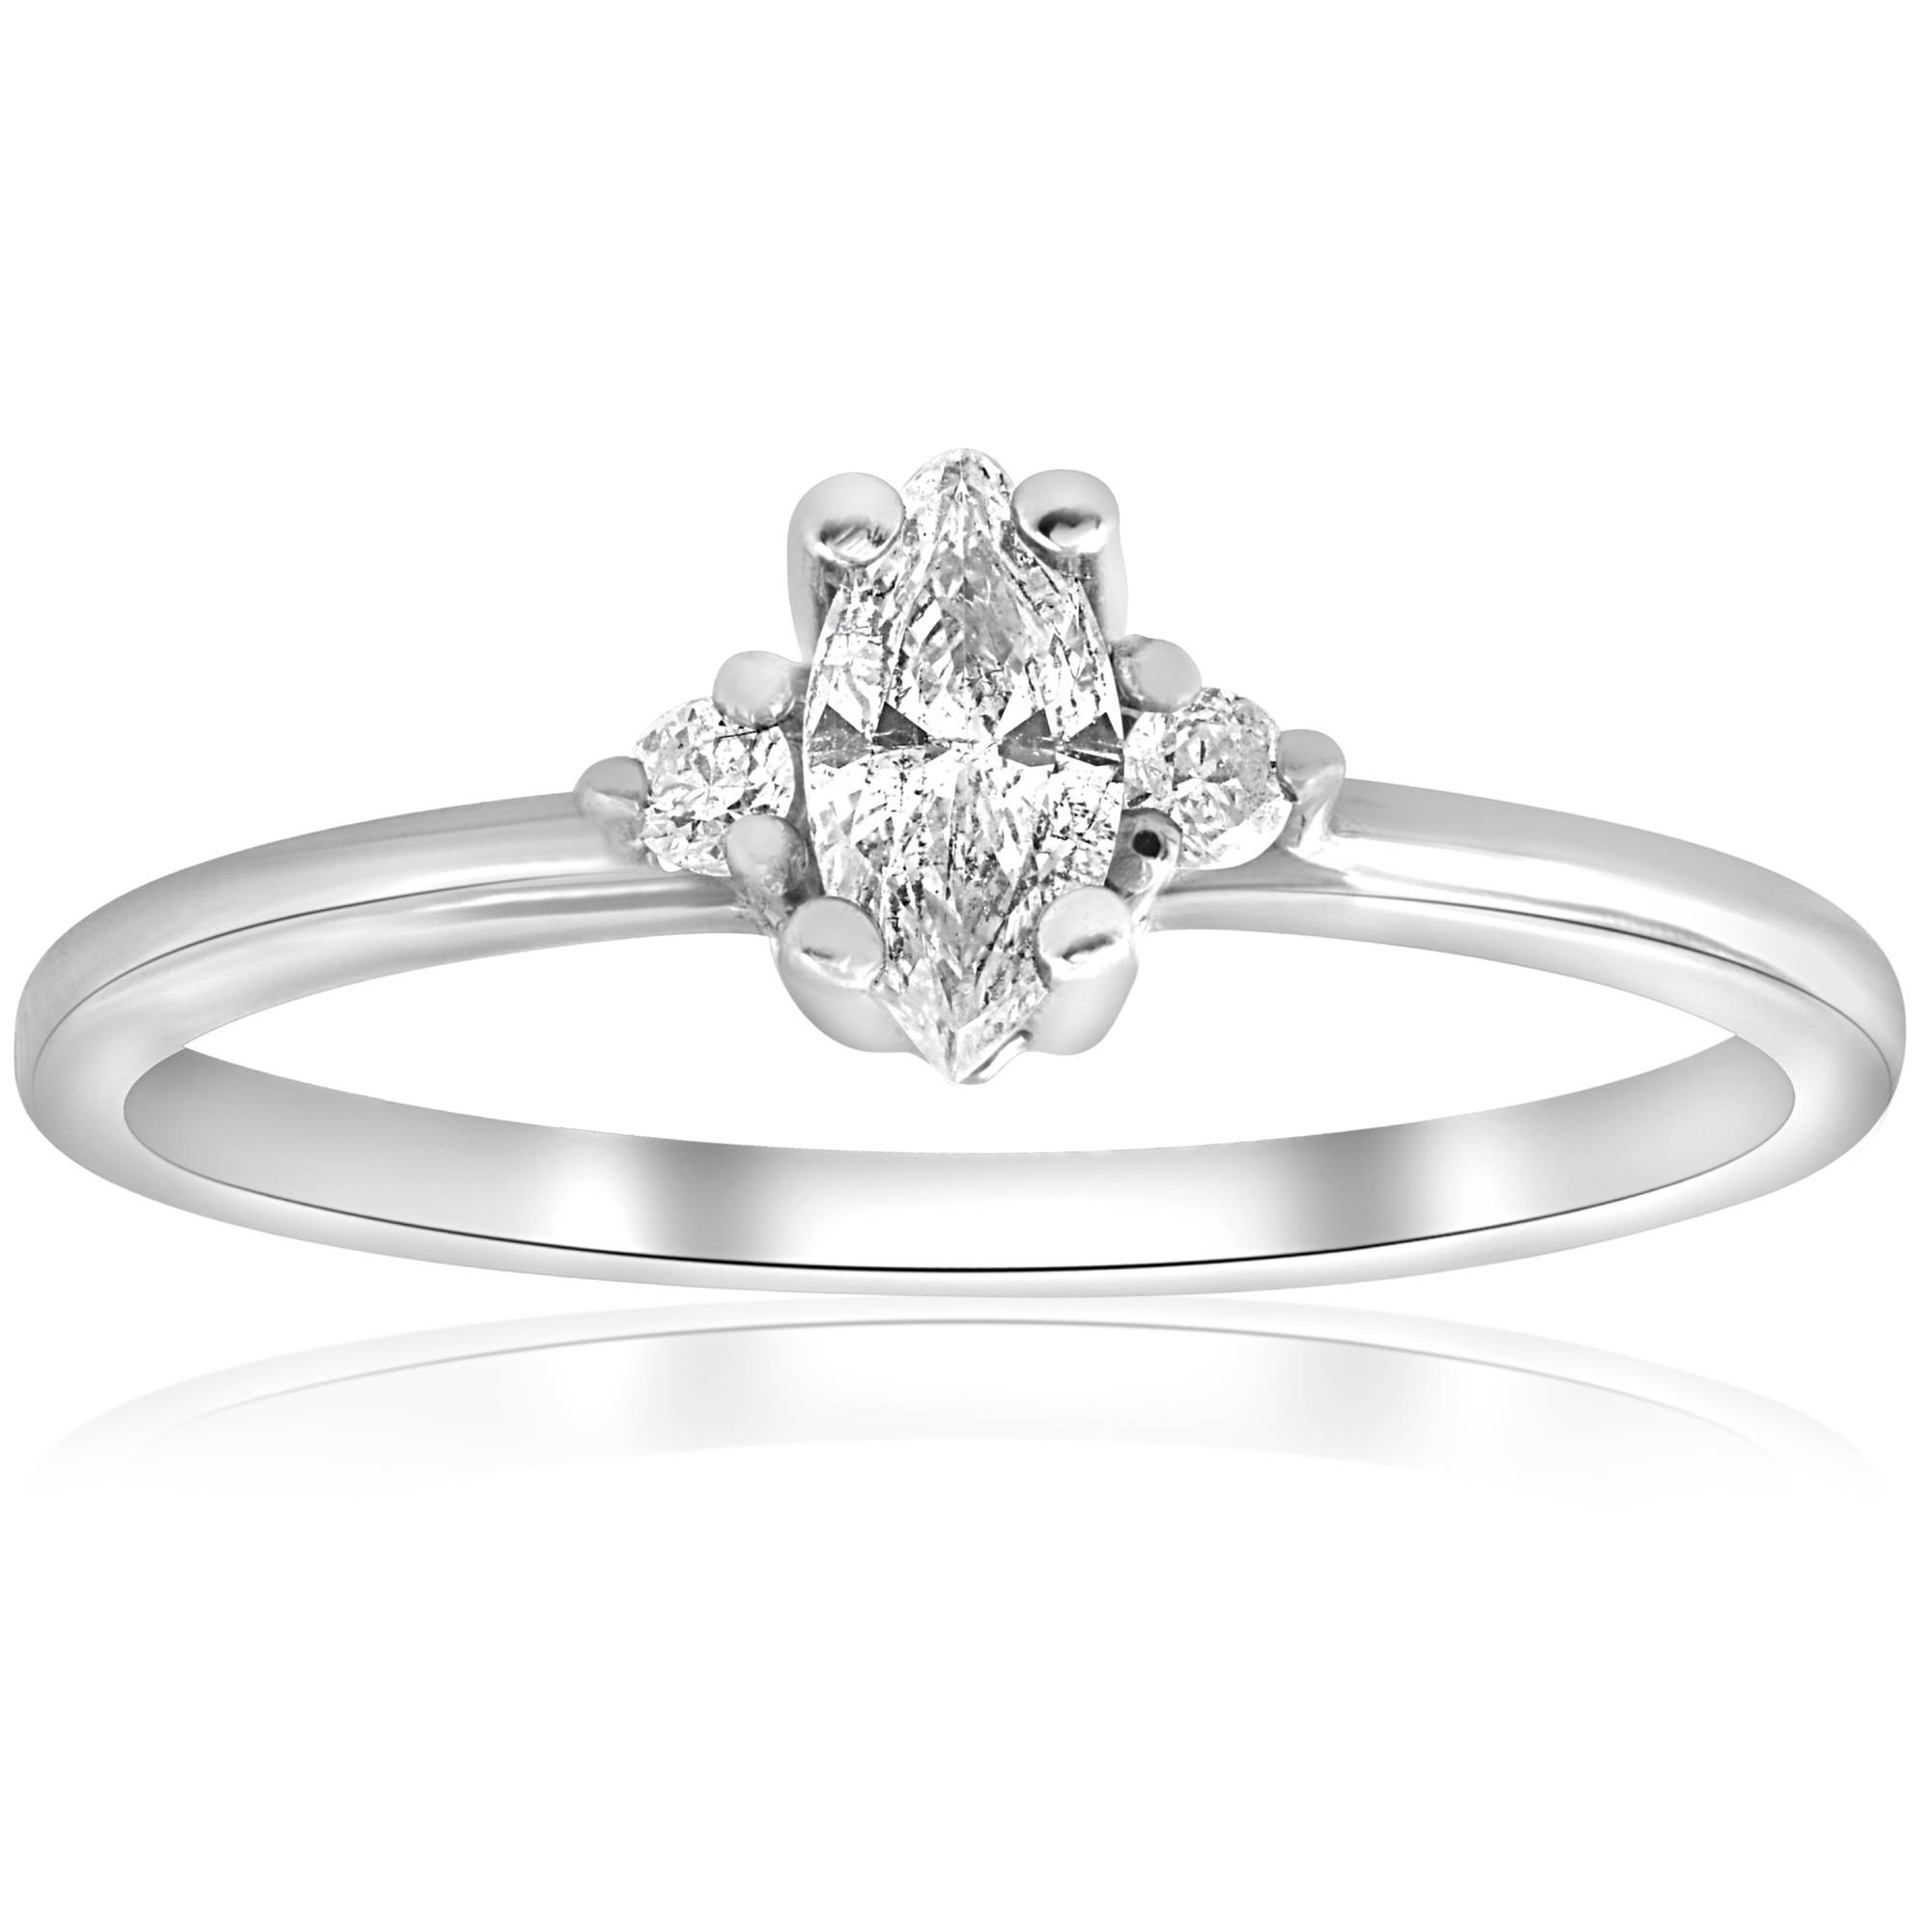 Marquise Diamond Engagement Rings
 Marquise Diamond Three Stone Engagement Ring 1 3 ct 10k